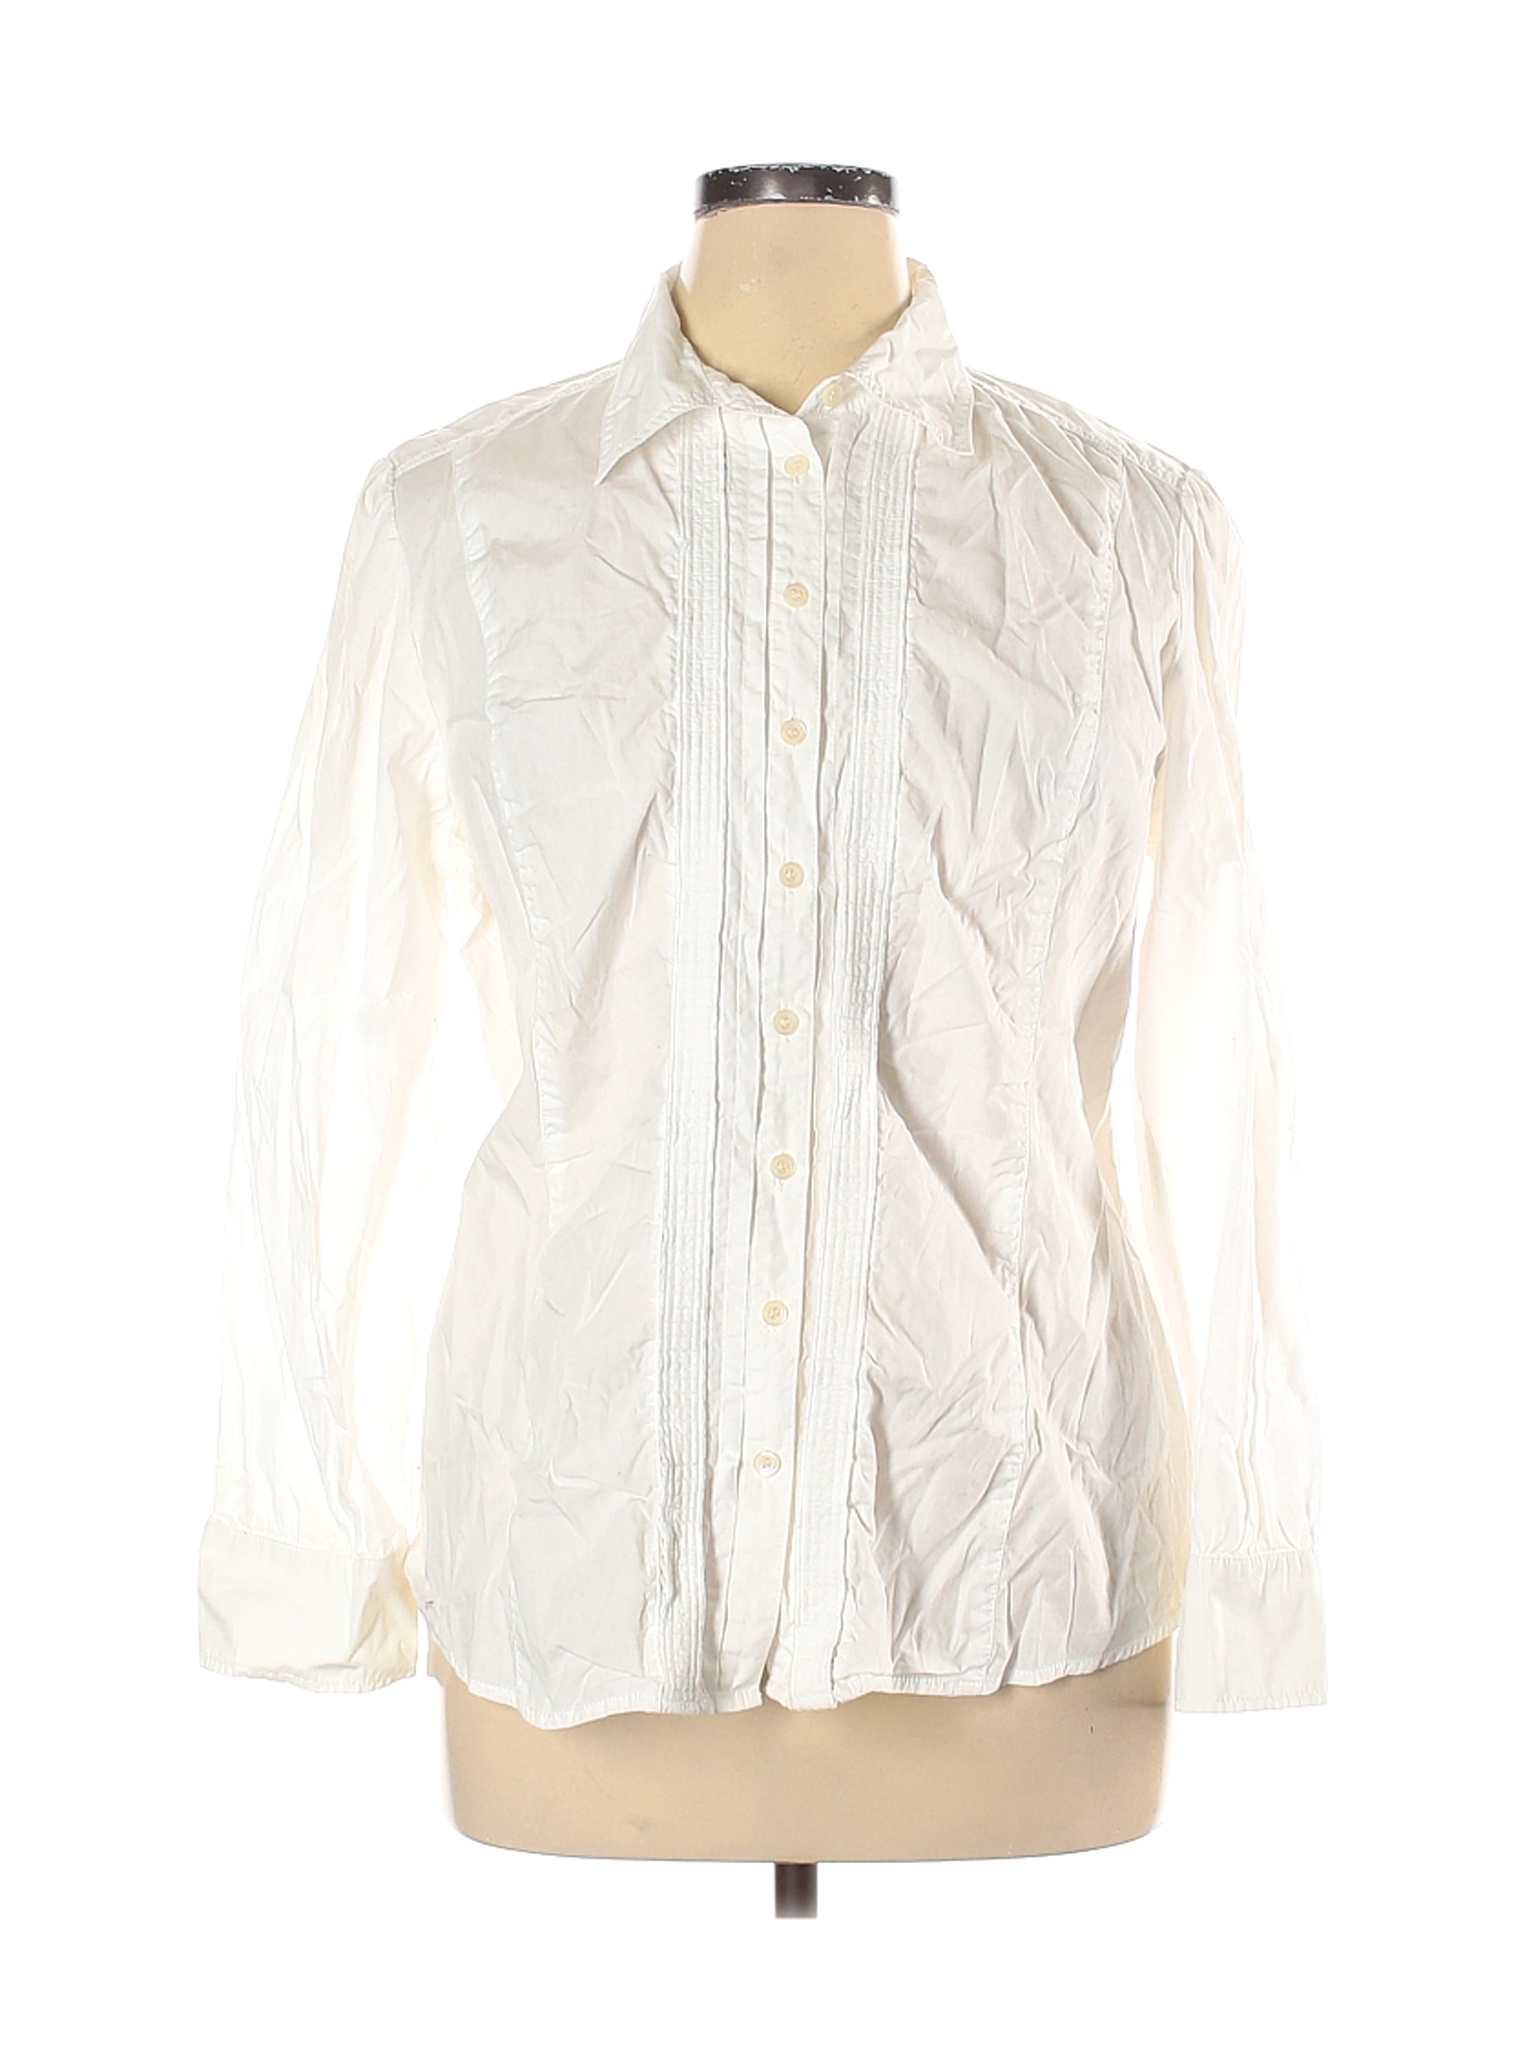 J.Jill Women White Long Sleeve Button-Down Shirt XL | eBay